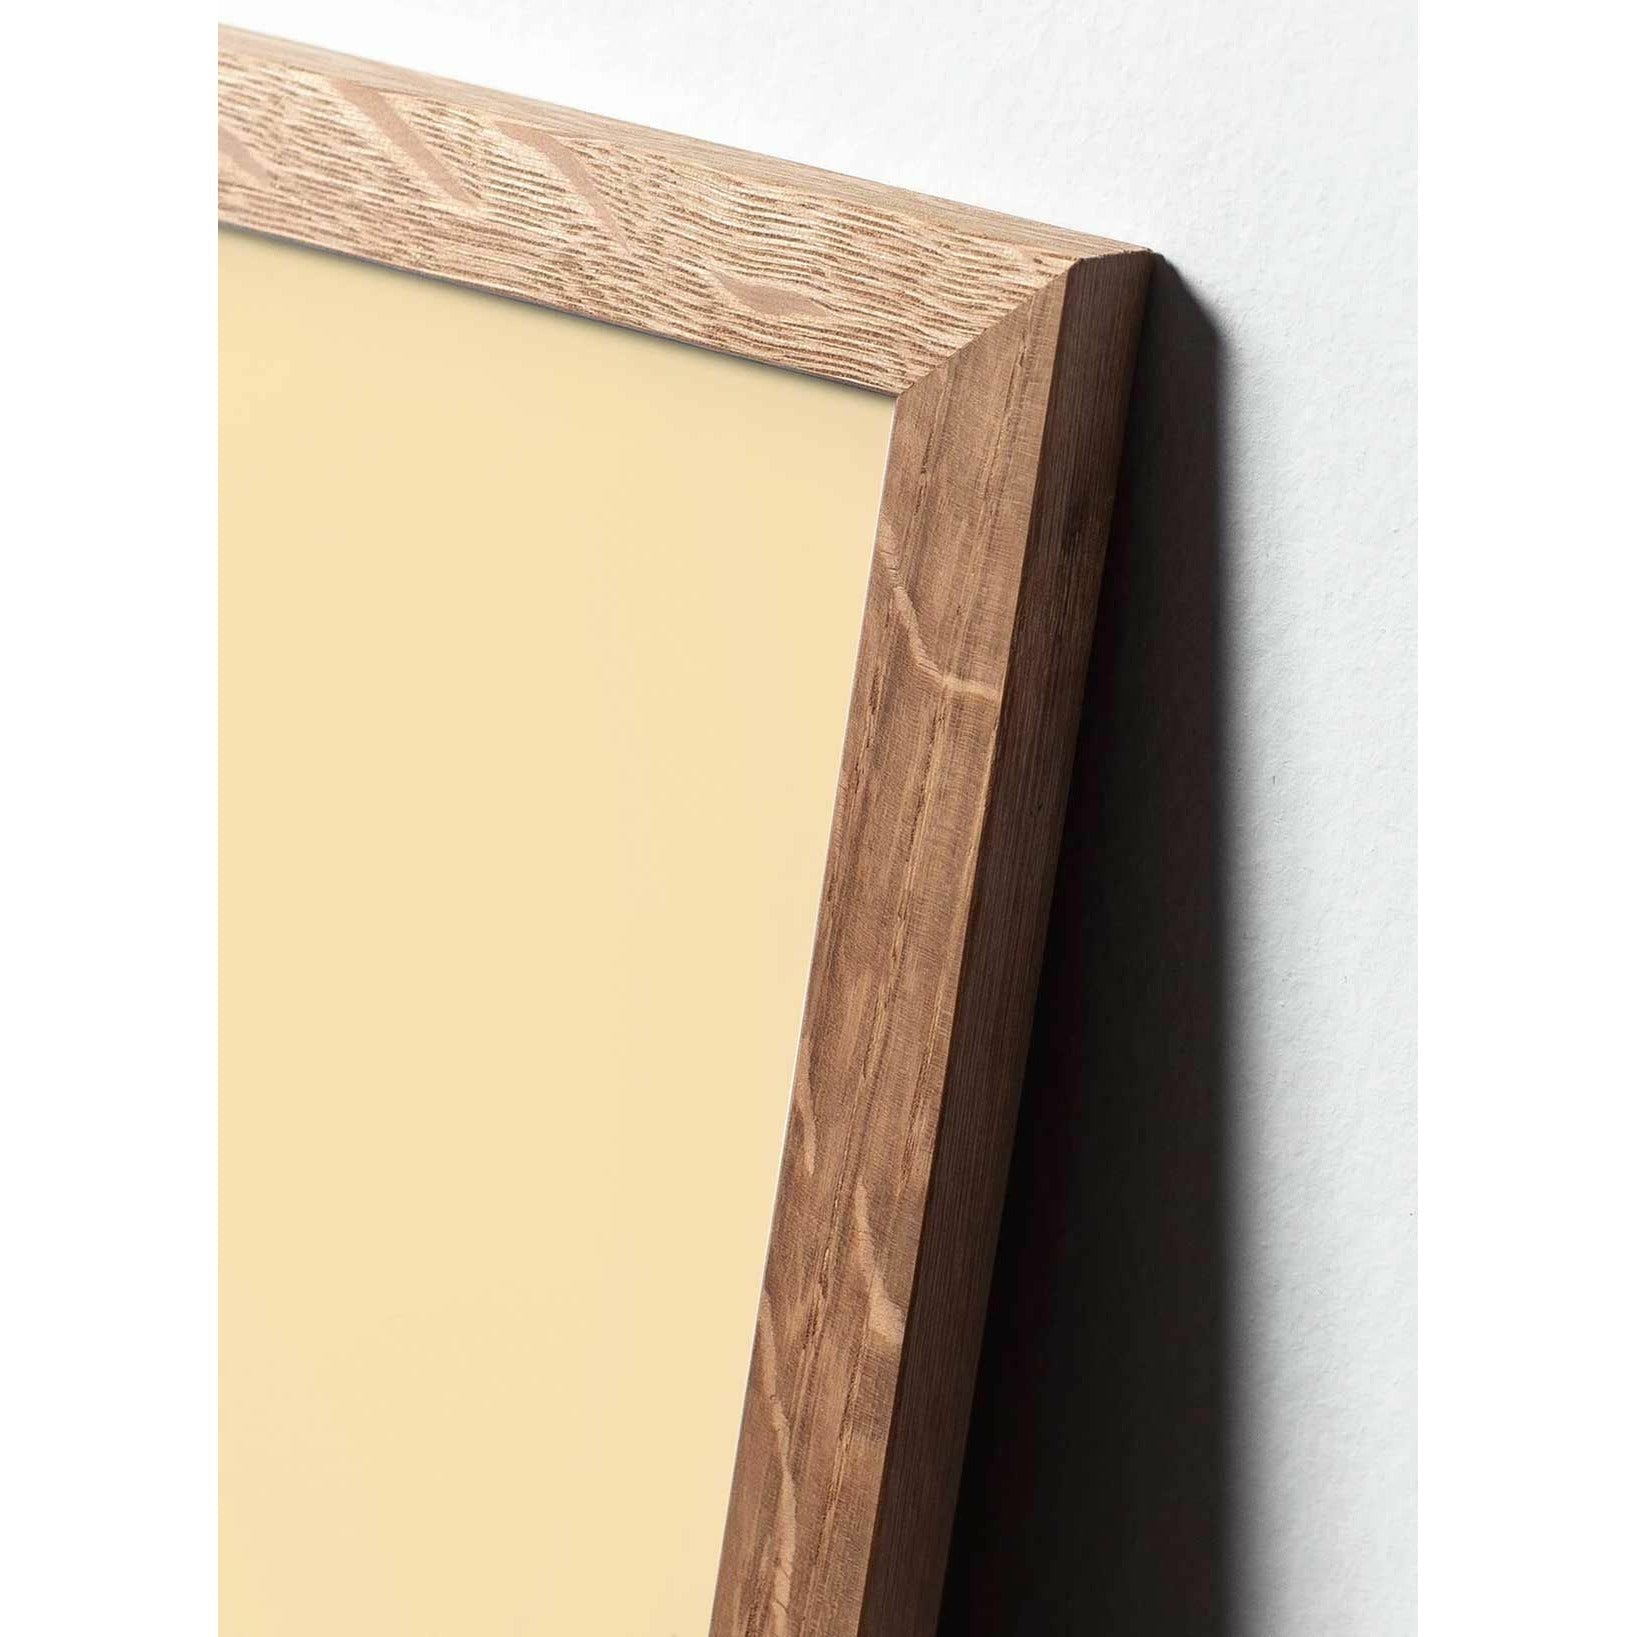 Brainchild Ant Design Icon Poster, Frame Made Of Light Wood 70 X100 Cm, Grey